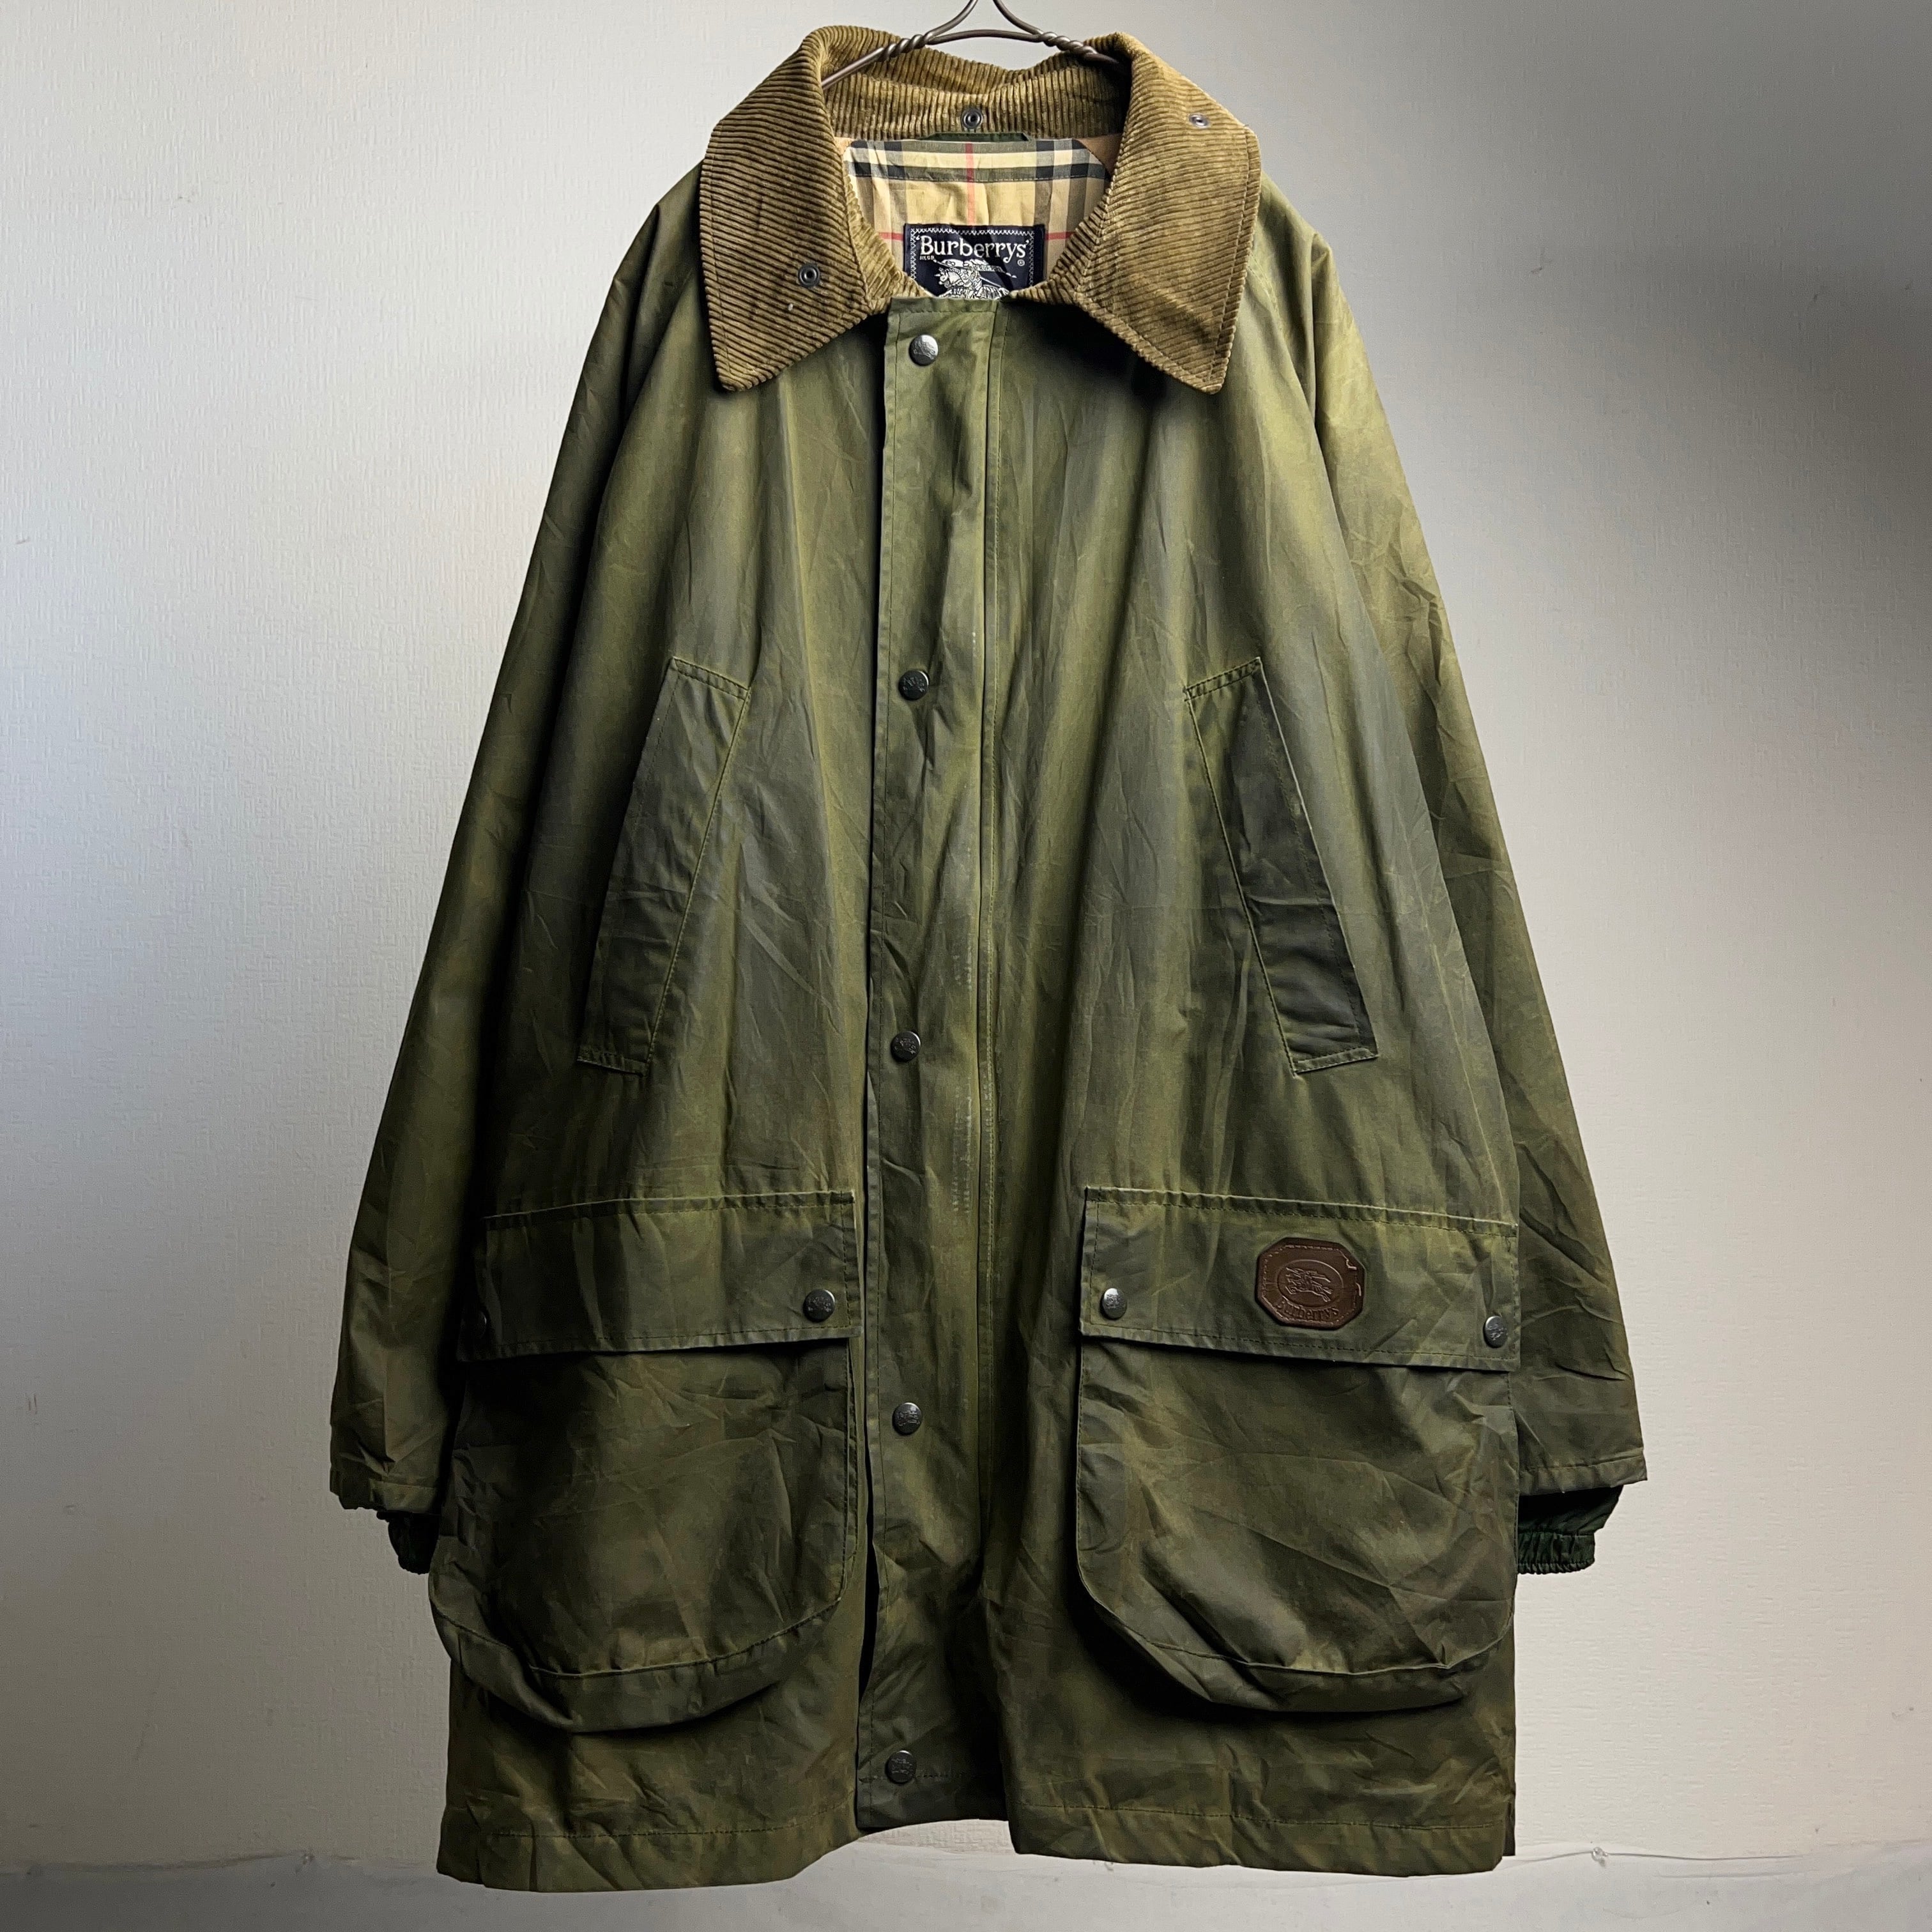 90's “Burberrys” Oiled Cotton Jacket 英国製 90年代 バーバリー